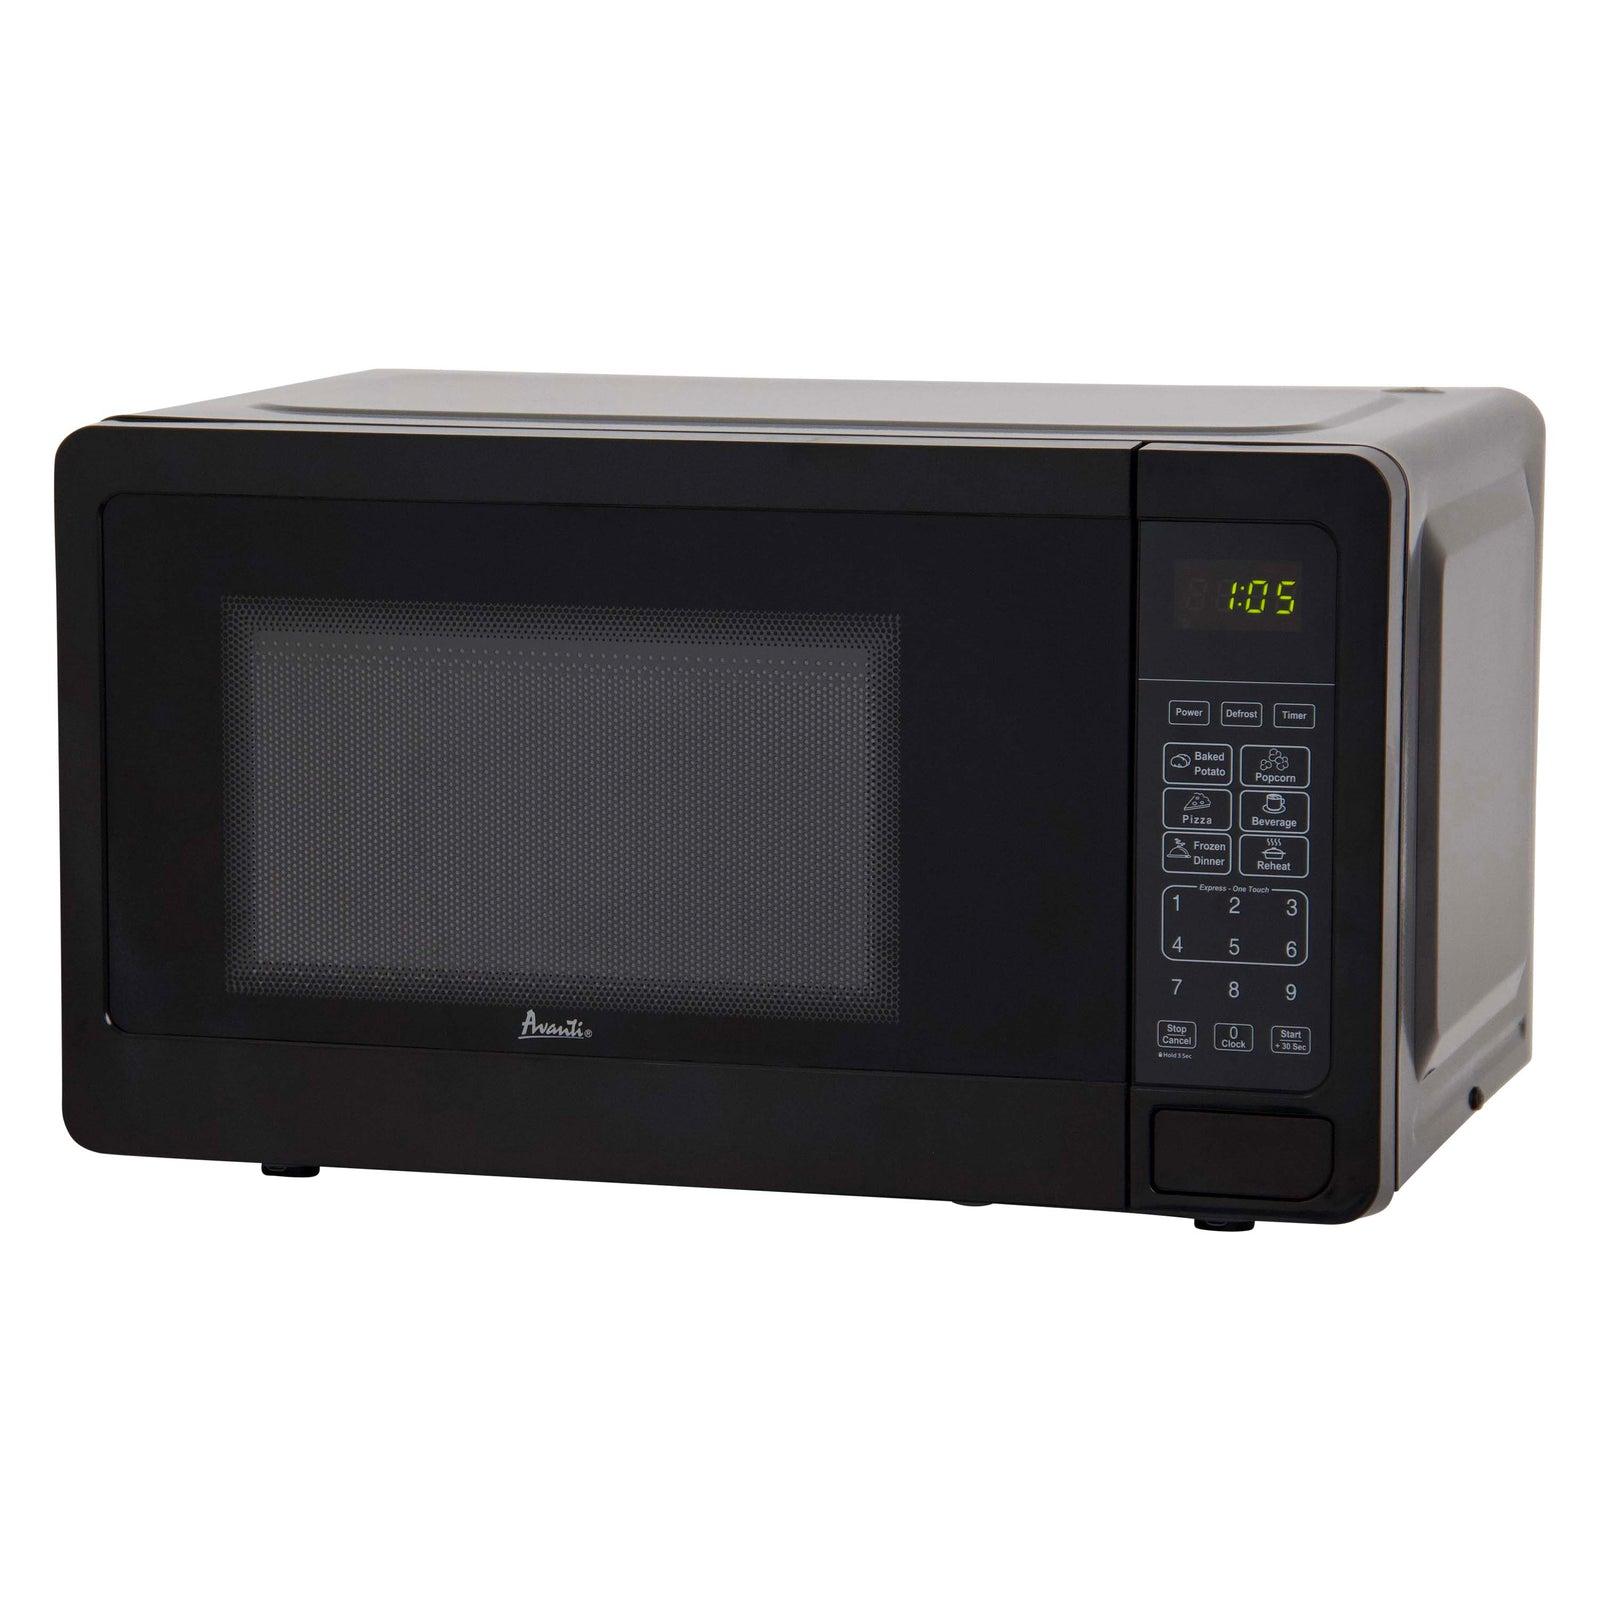 Avanti Countertop Microwave Oven, 0.7 cu. ft. - Stainless Steel / 0.7 cu. ft.